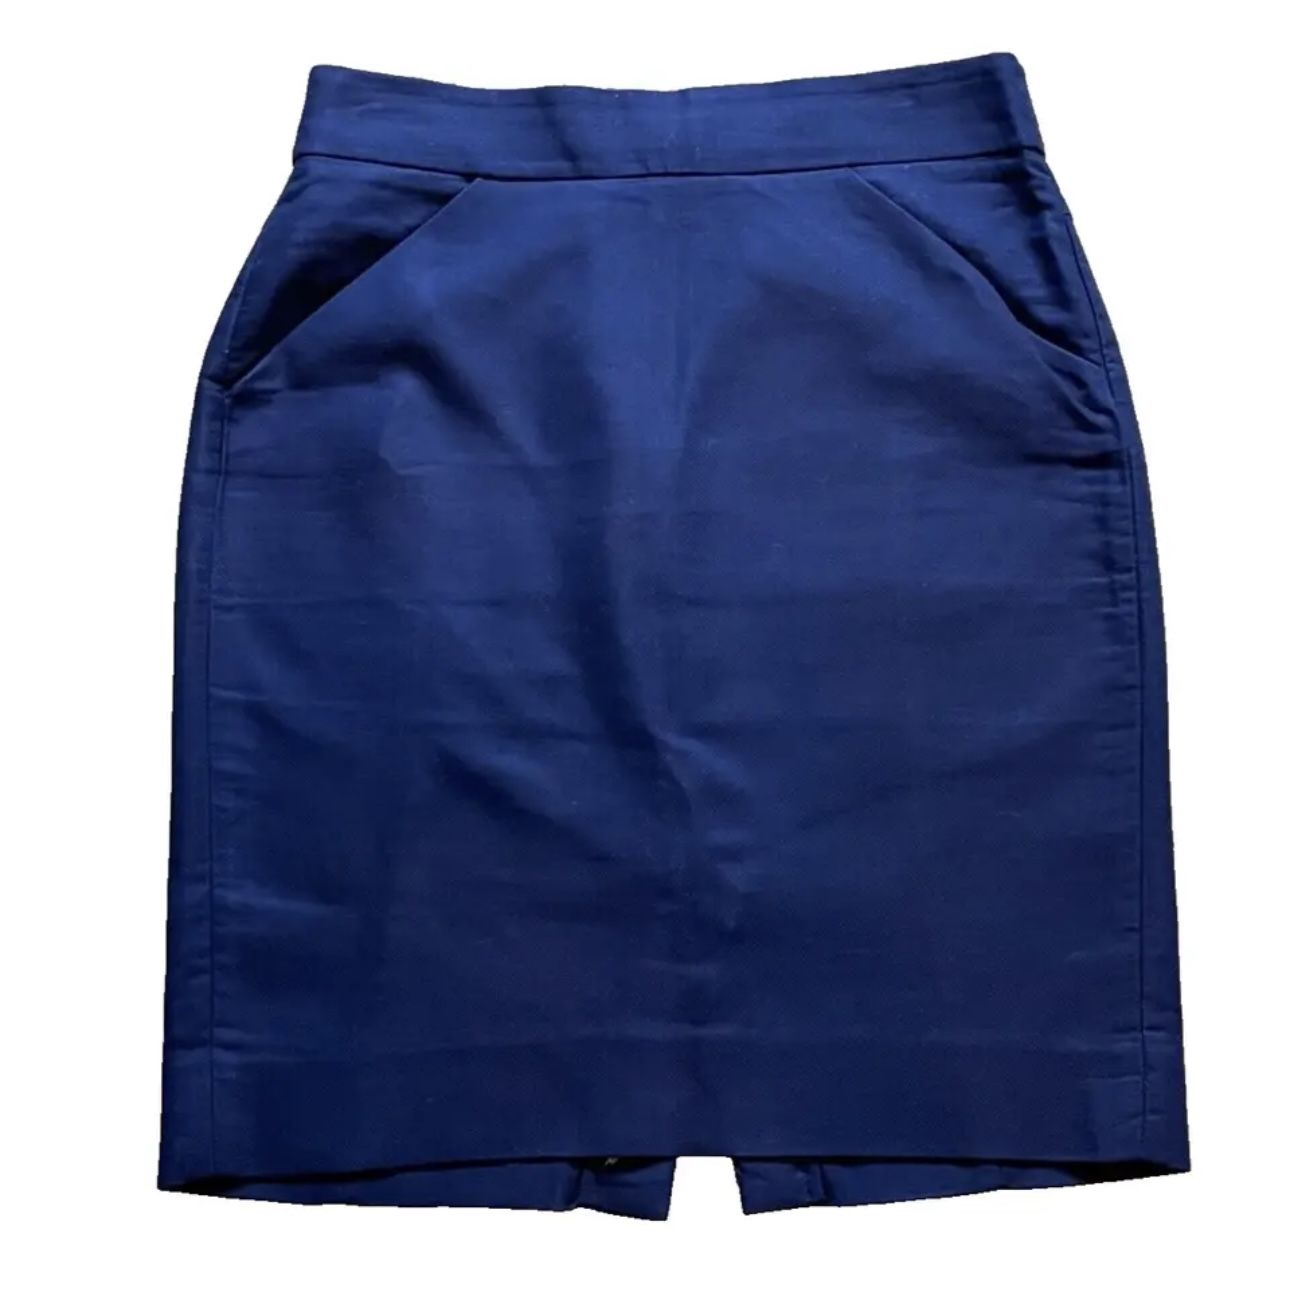 J. Crew 37415 Navy Blue Double-Serge Cotton Kick Pleat Short Pencil Skirt 00